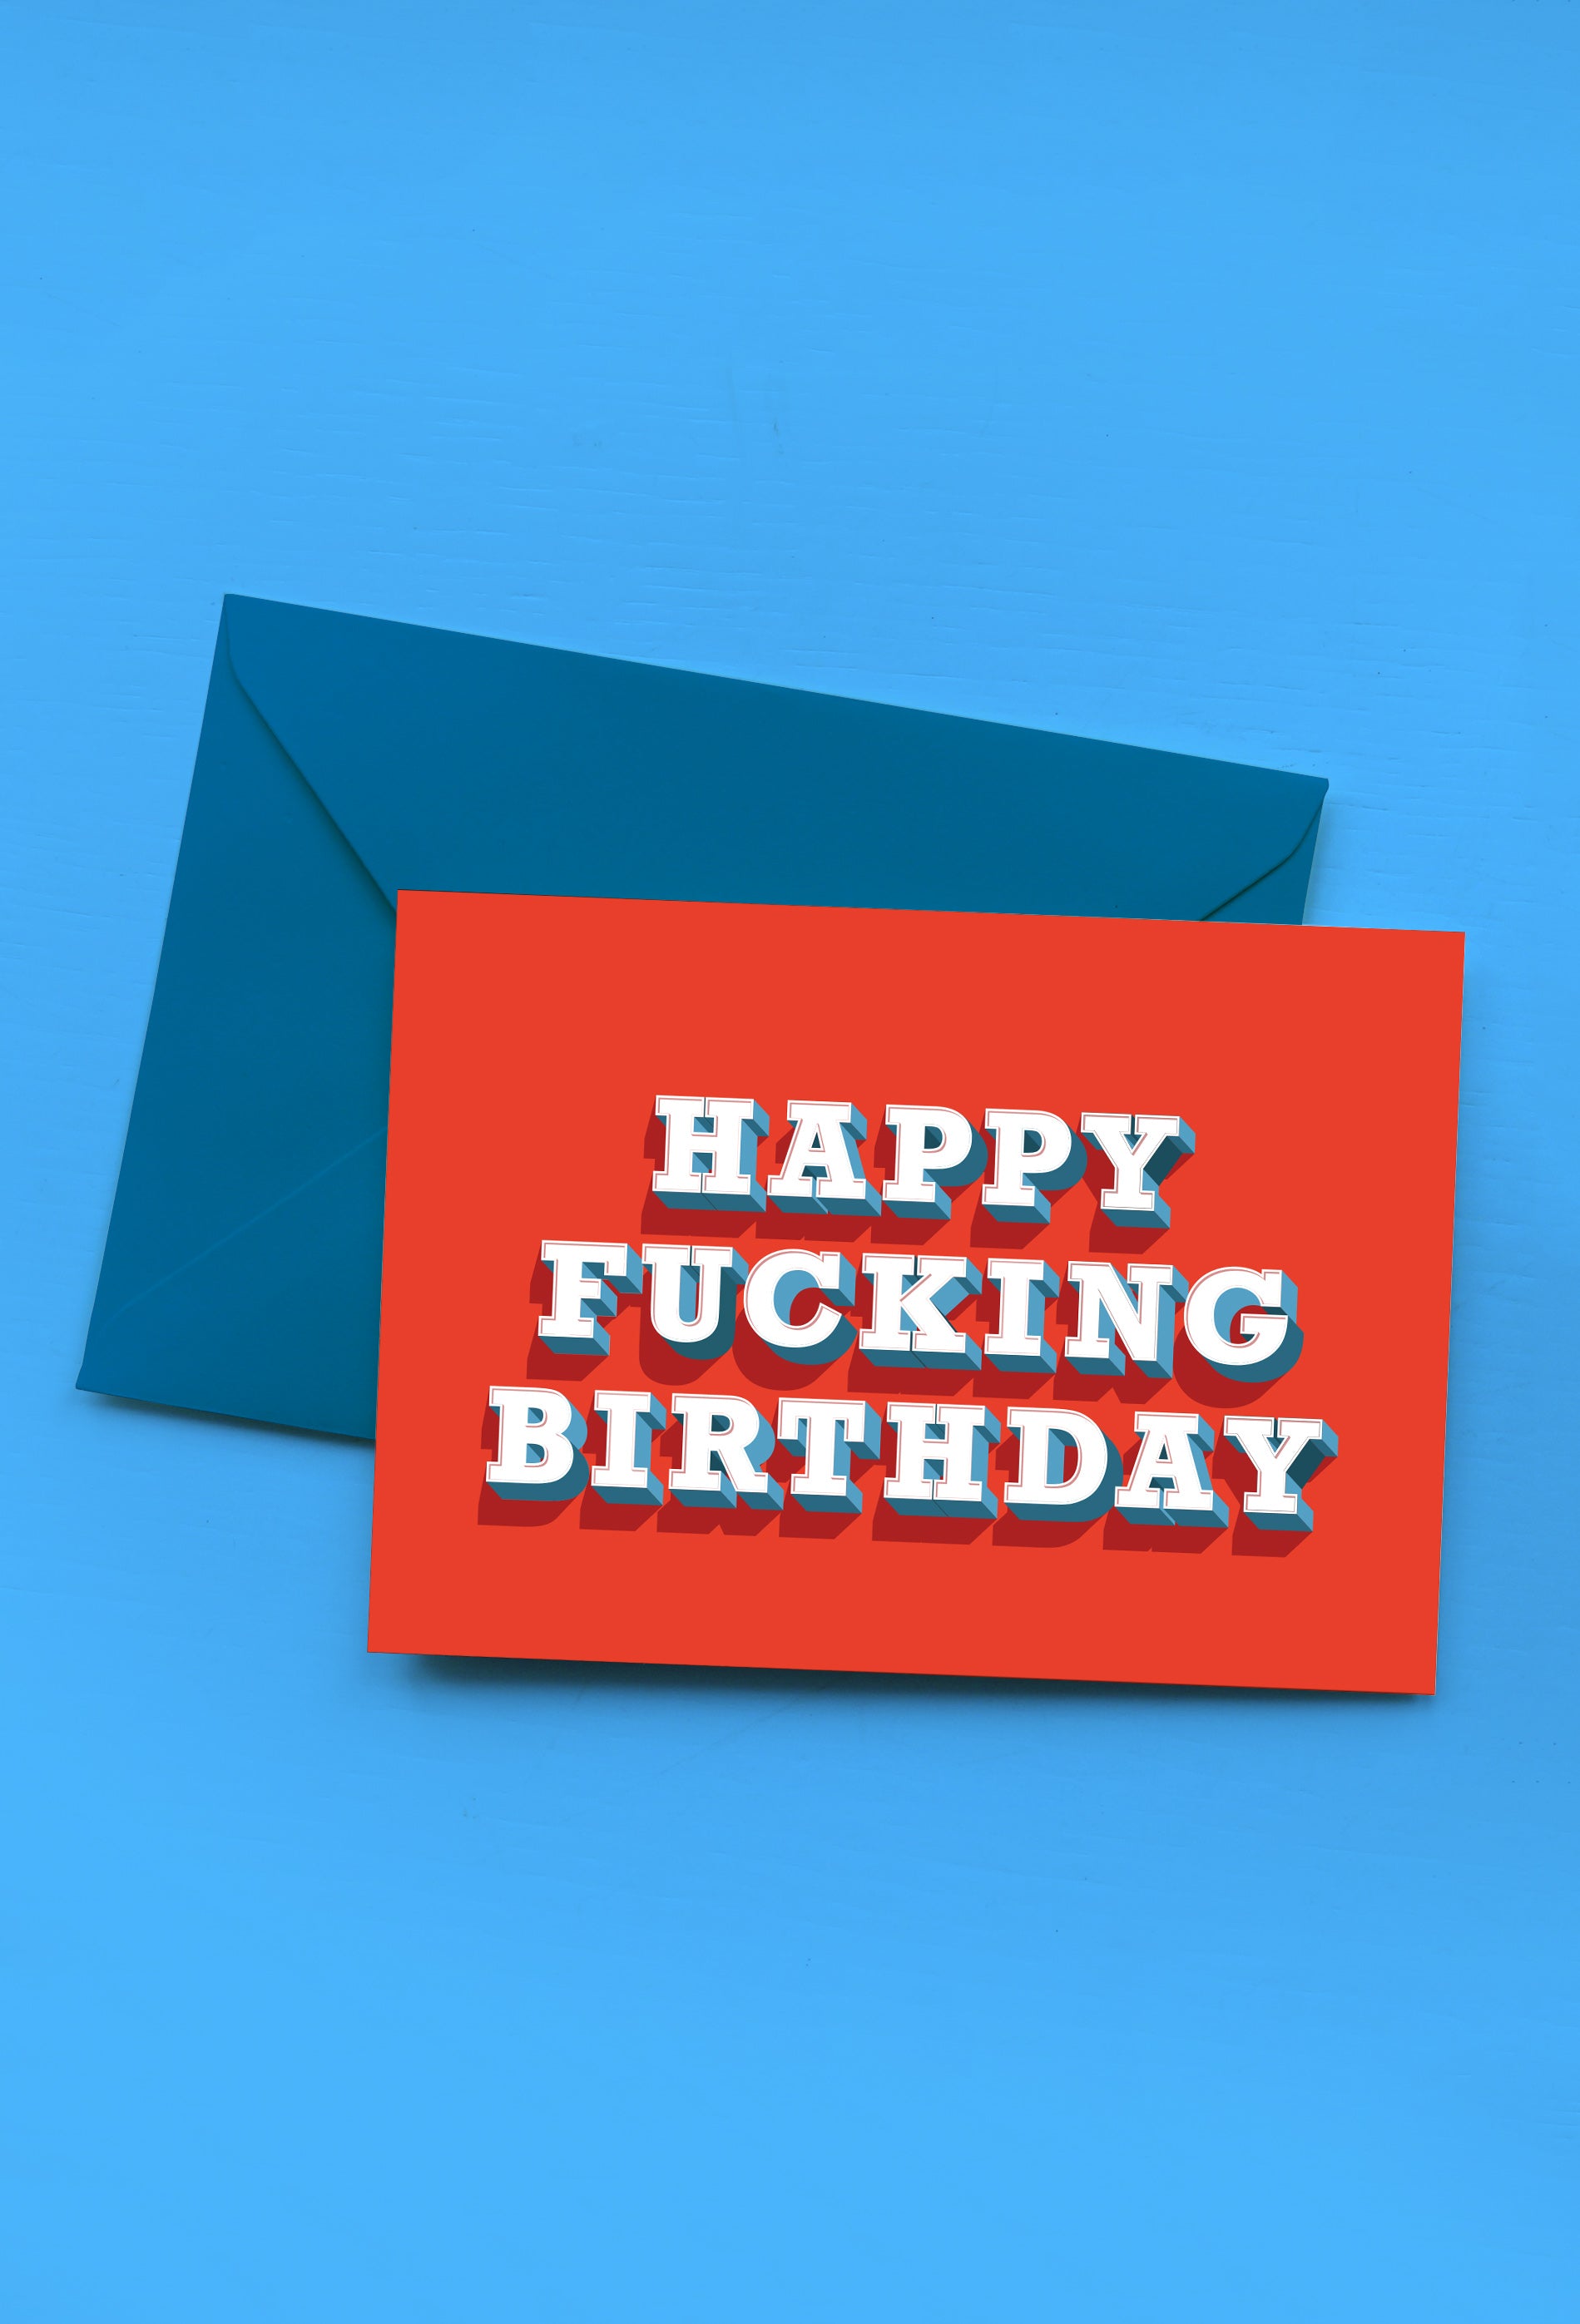 HAPPY FUCKING BIRTHDAY - GREETINGS CARD